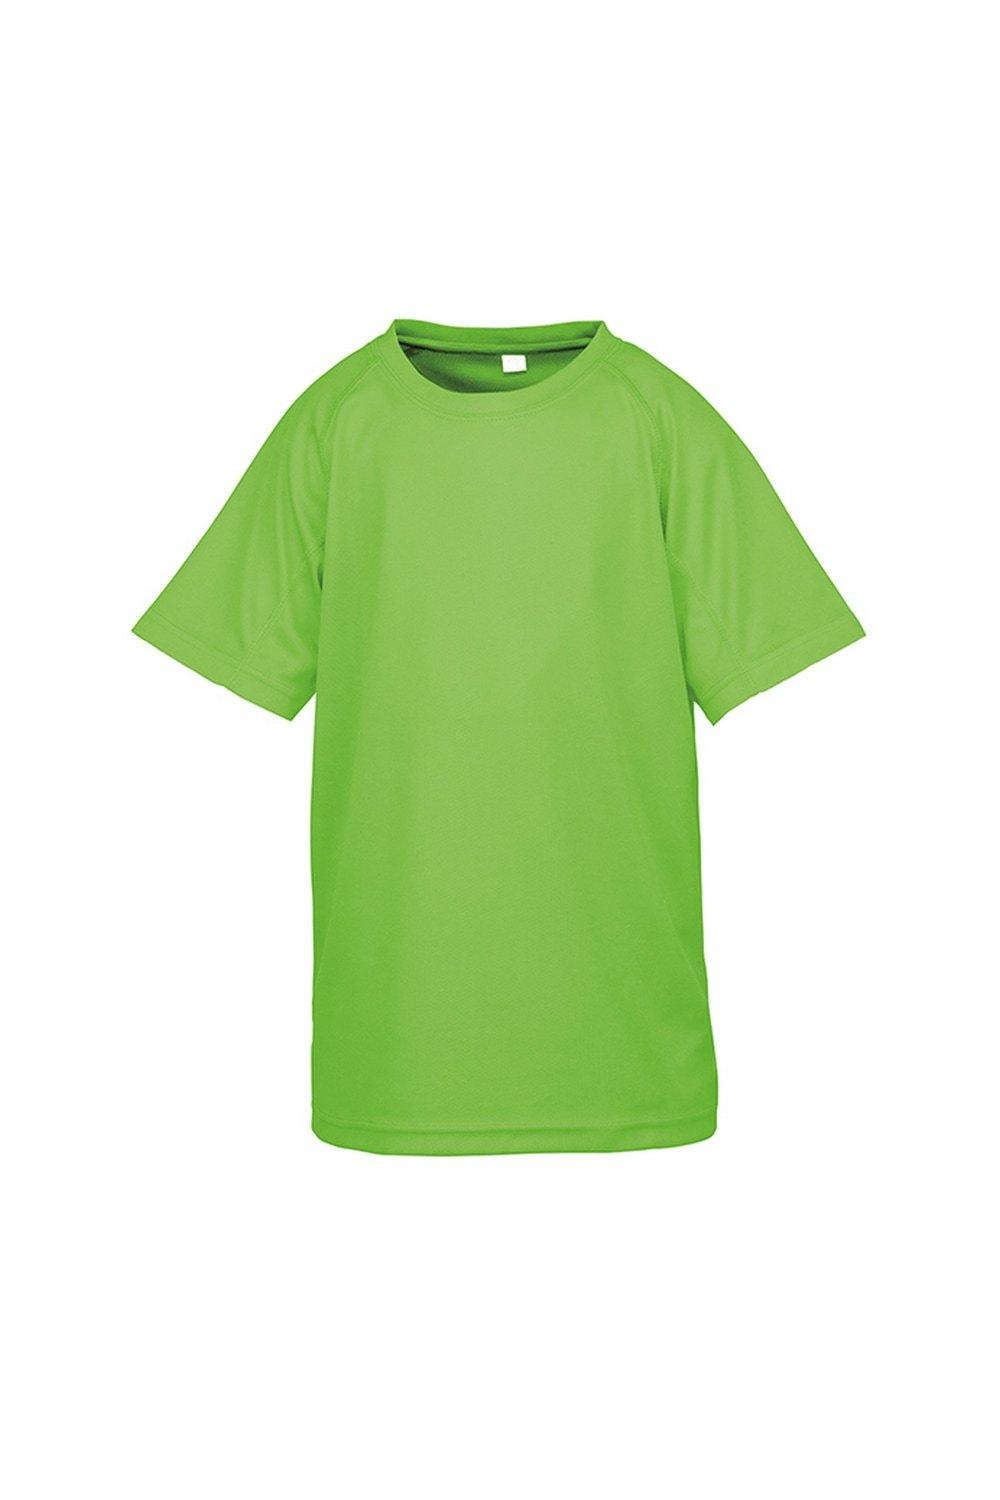 цена Детская футболка Impact Performance Aircool Spiro, зеленый